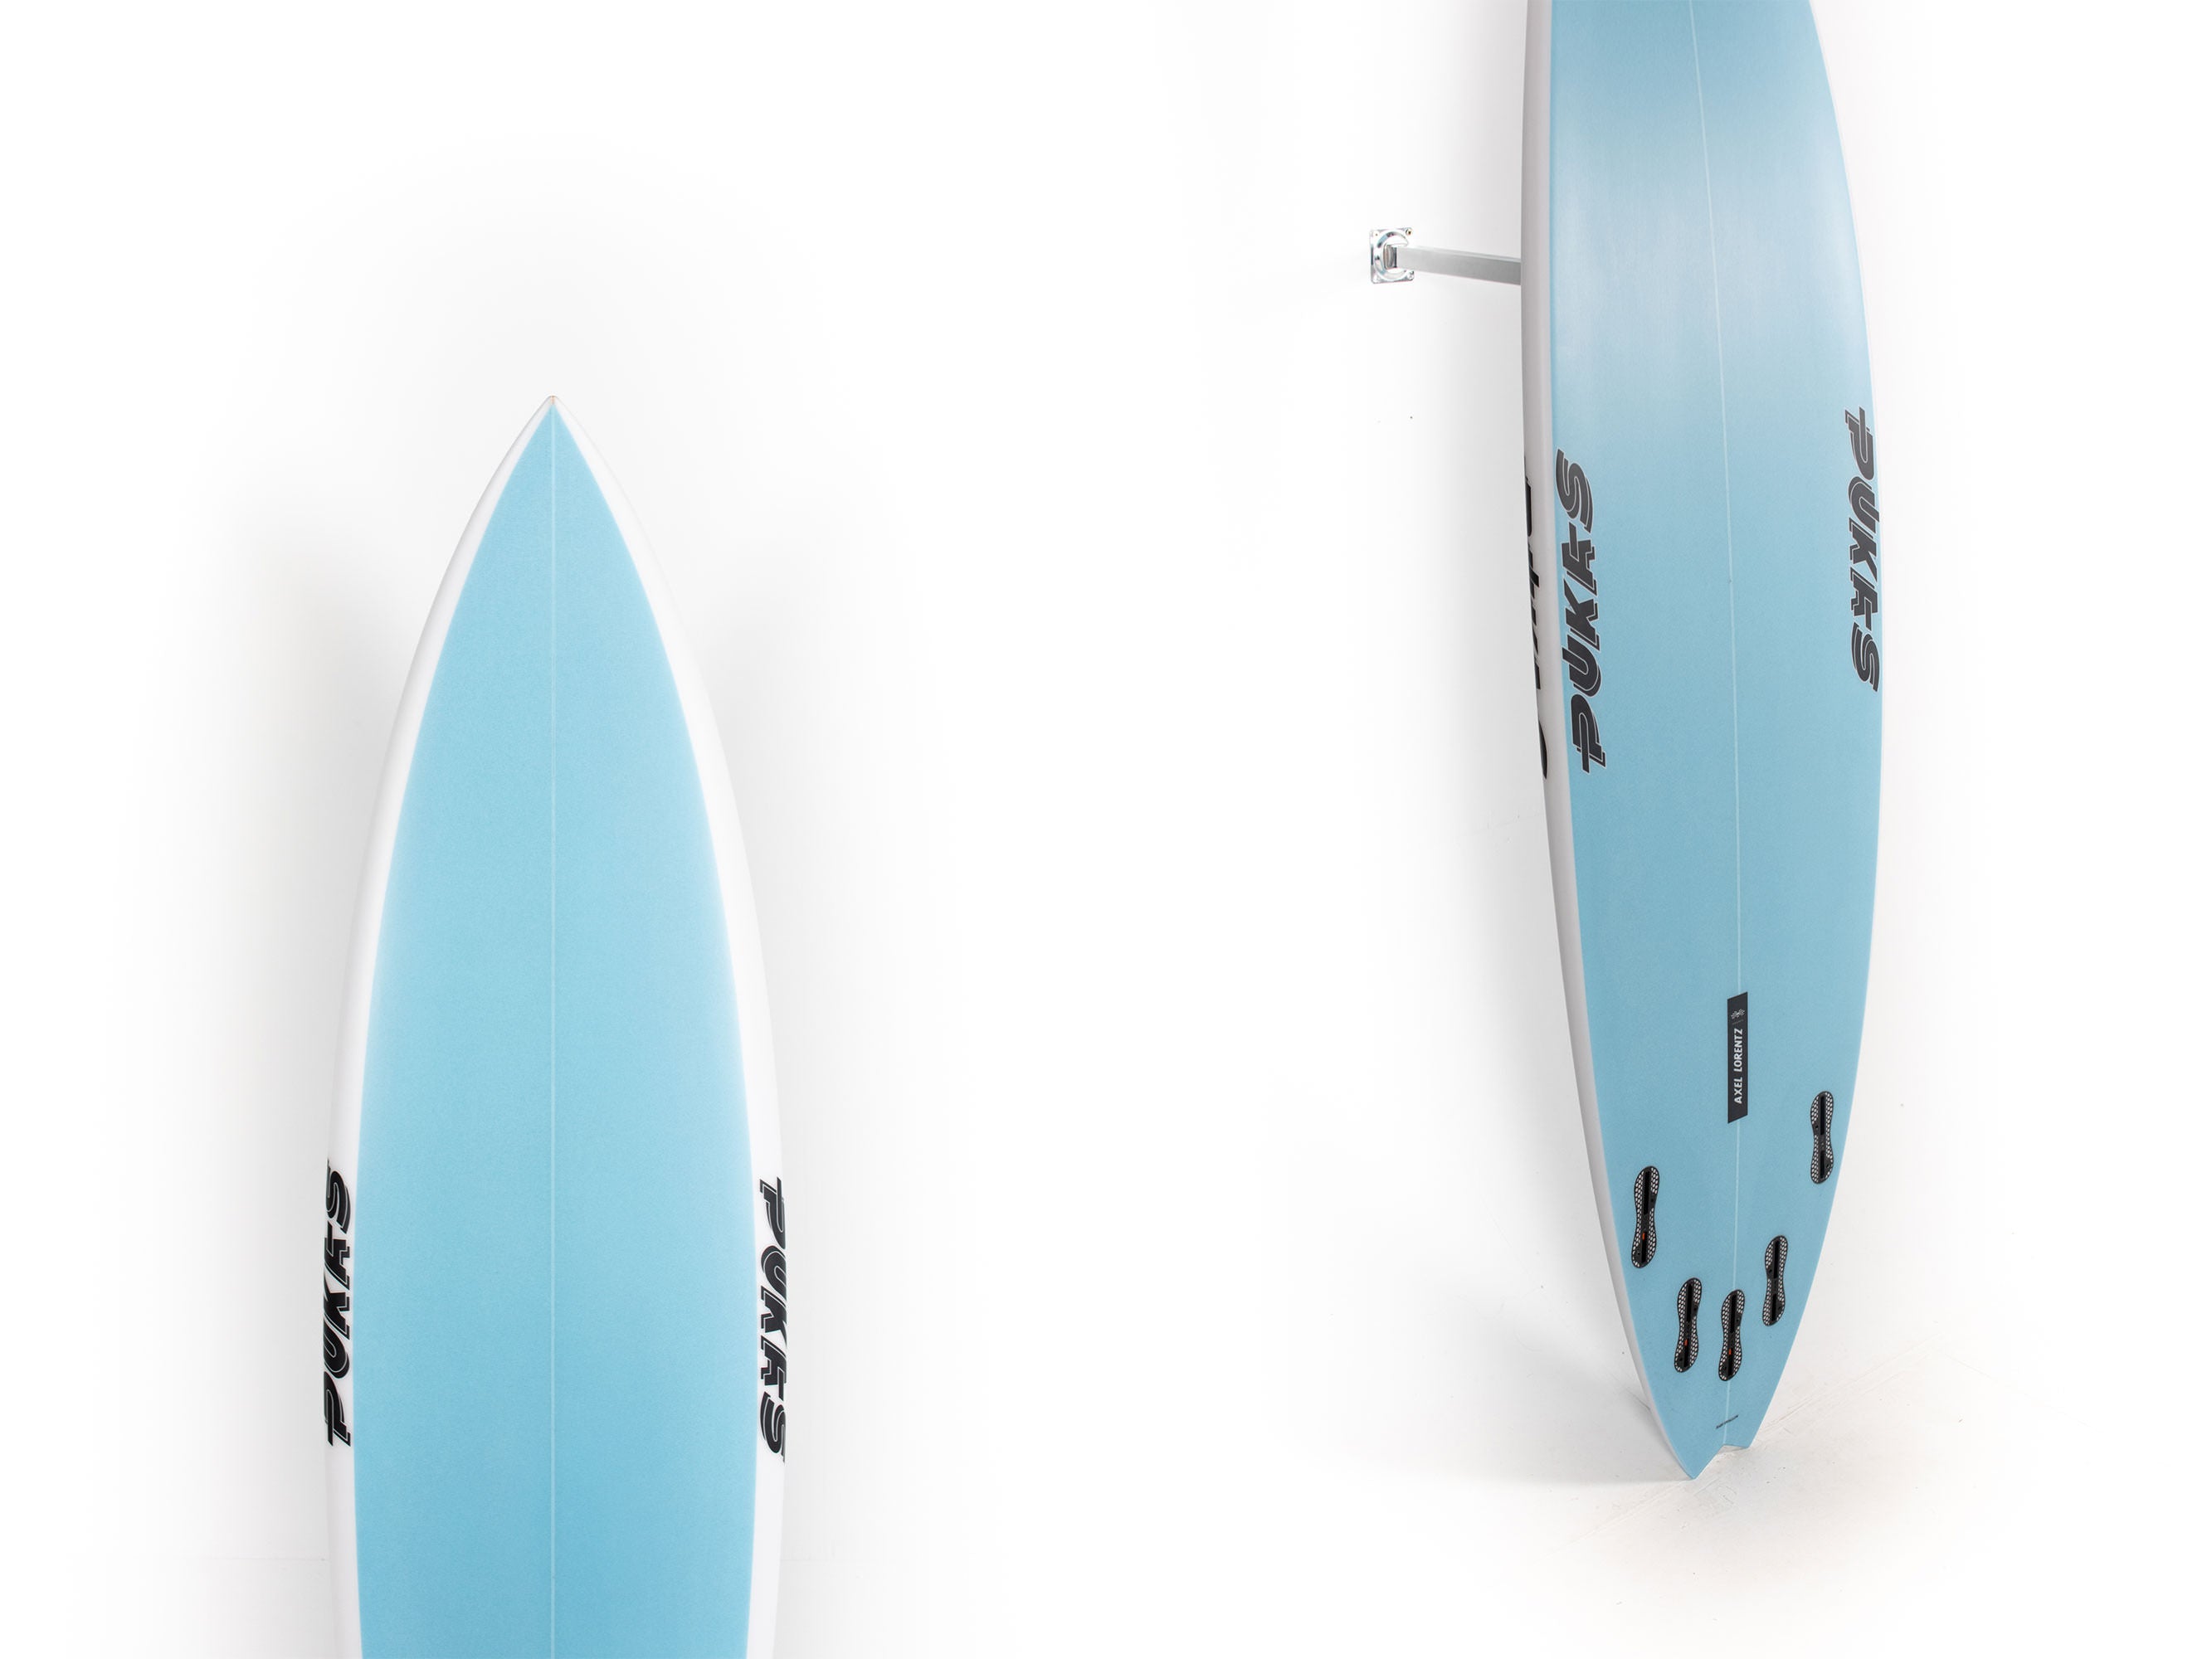 Pukas Surfboard - BABY SWALLOW by Axel Lorentz - 6’4” x 19 x 2,37 - 31,19L -  AX08683